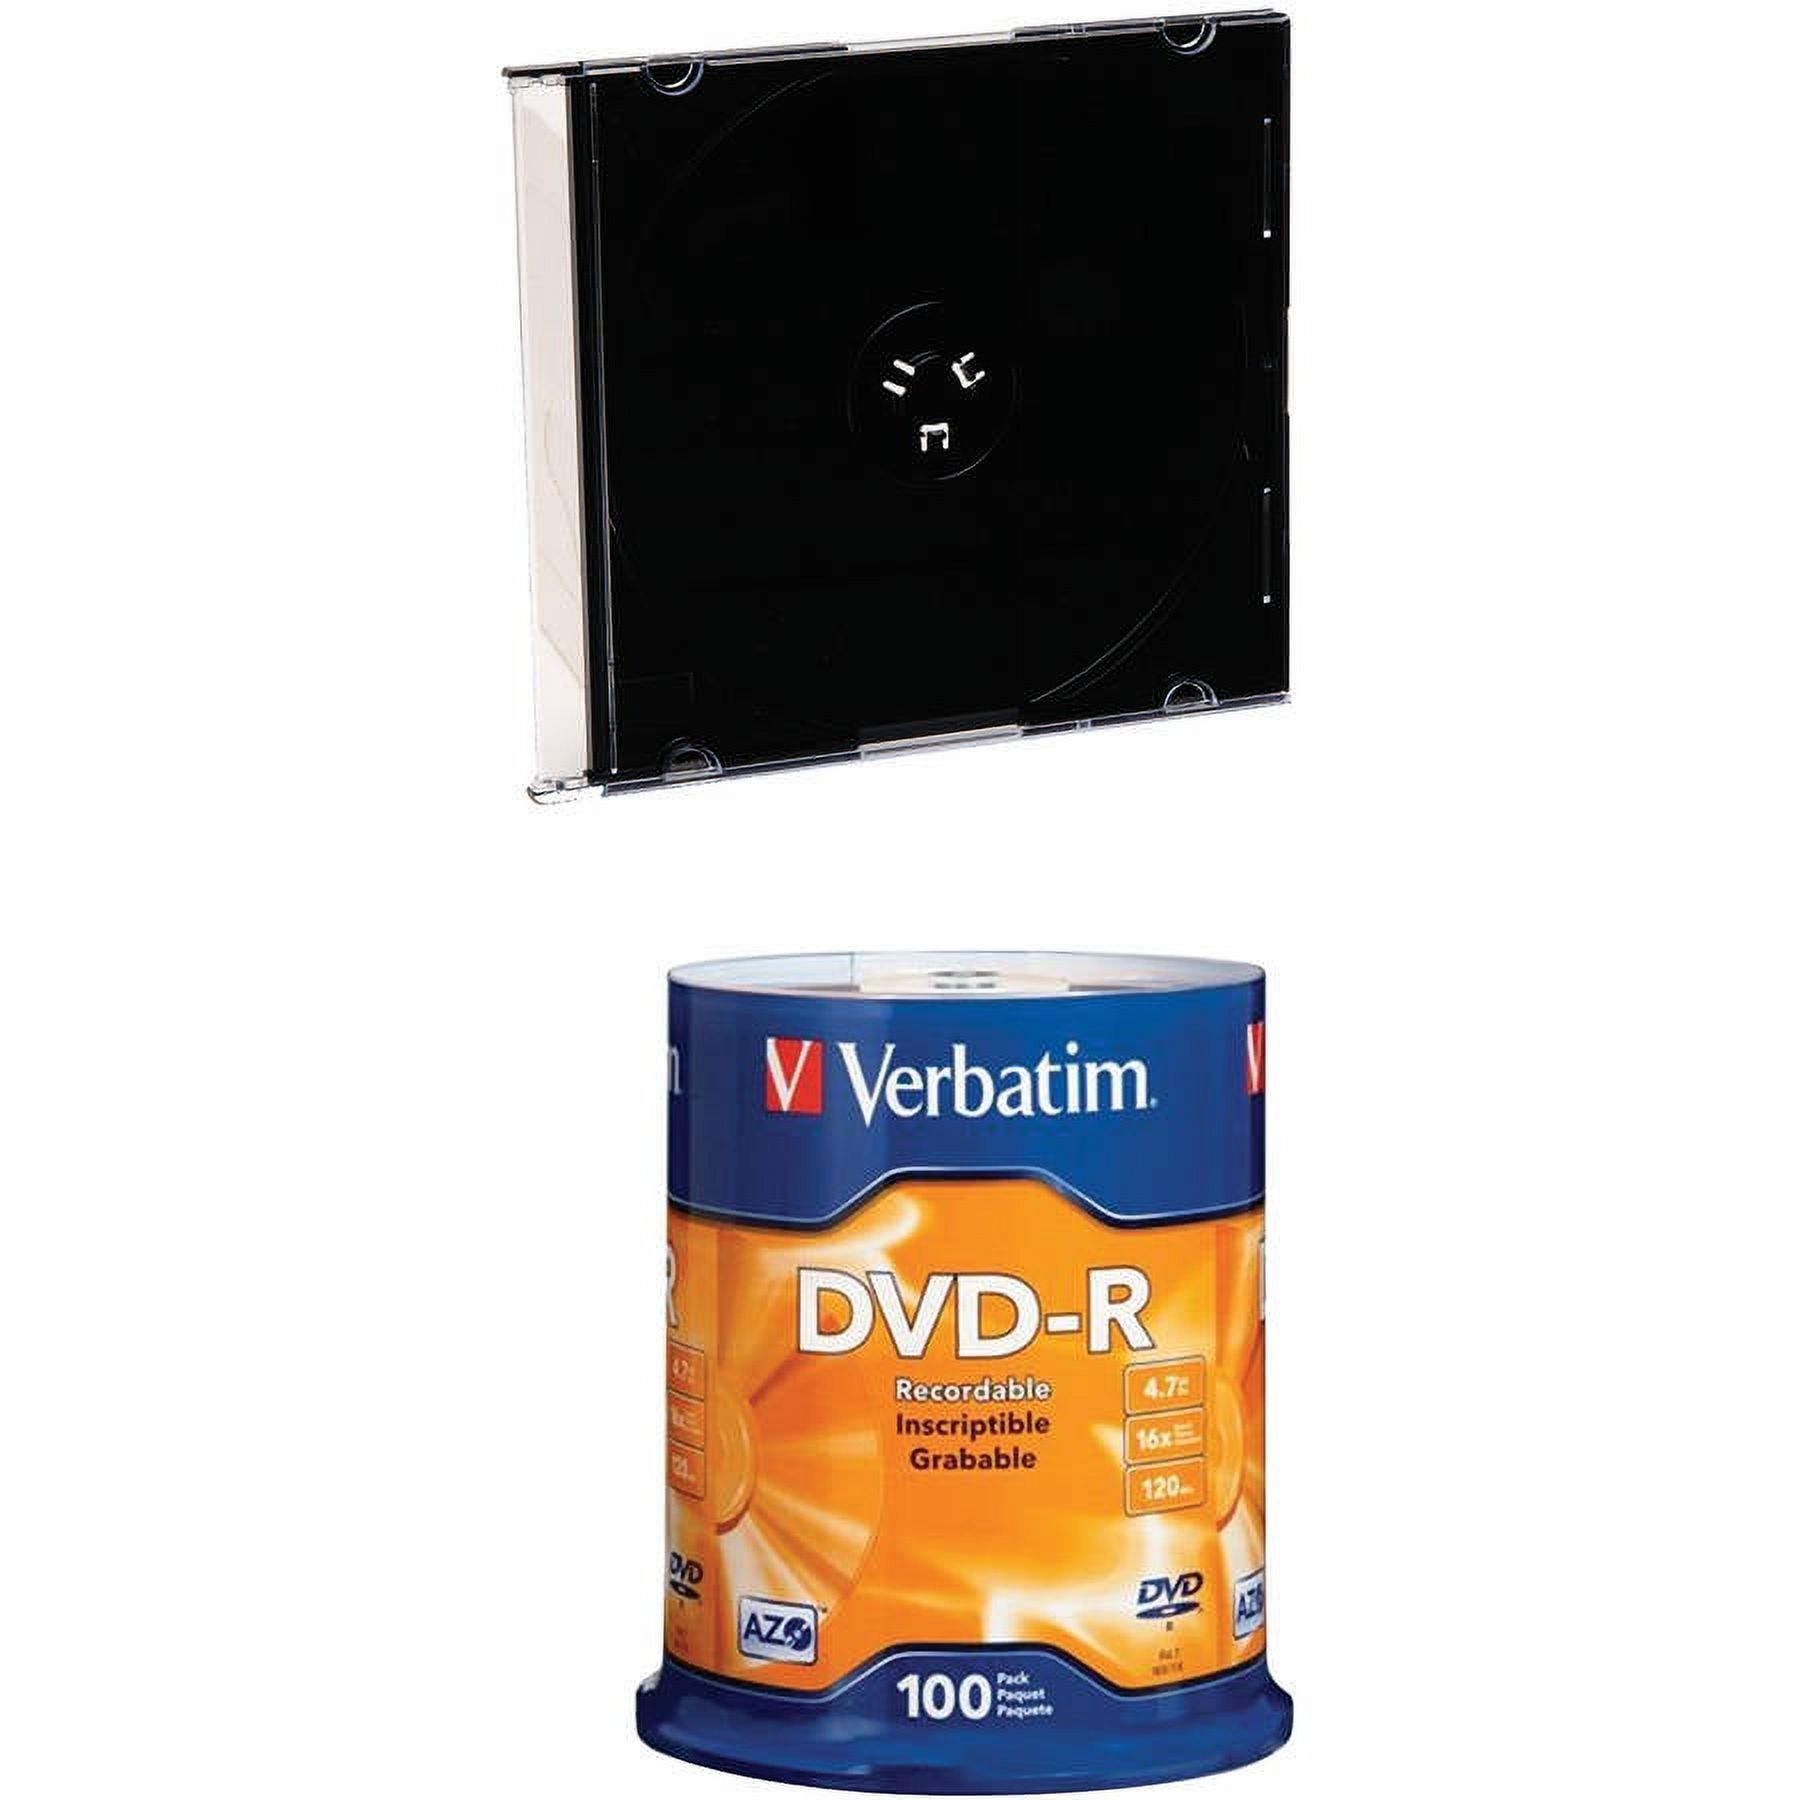 Verbatim CD/DVD Slim Storage Cases (200-Pack) and 4.7GB DVD-Rs (100-Pack) - image 1 of 1